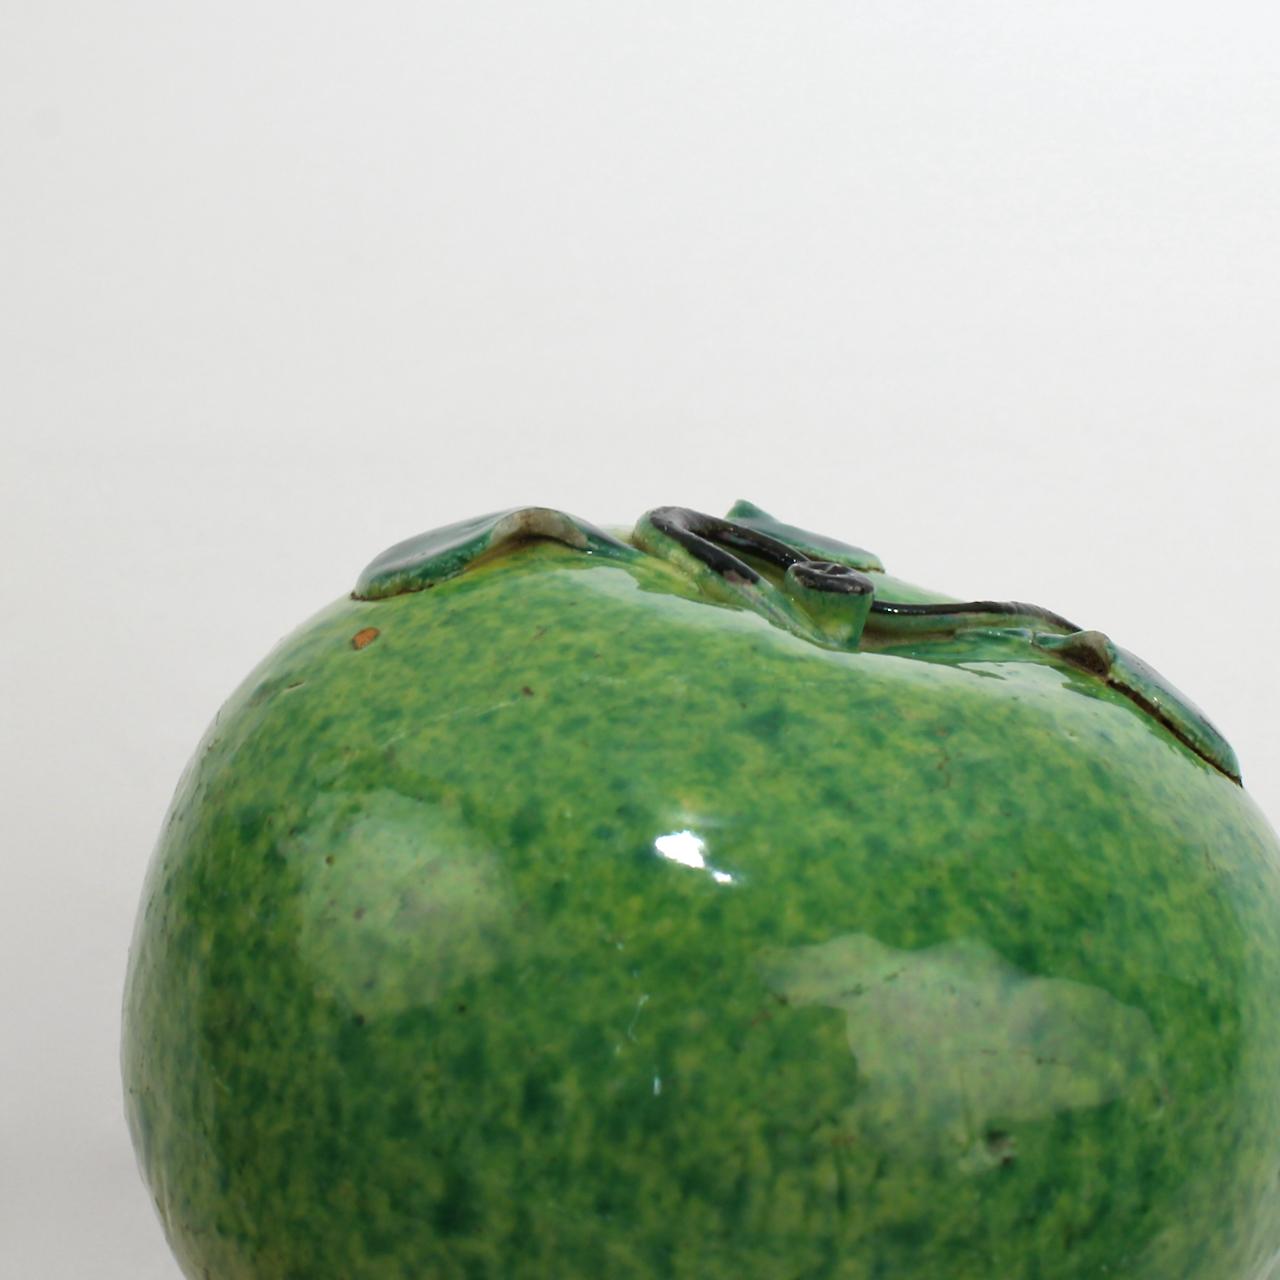 Antique Chinese Export Porcelain Green Apple Altar Fruit Ex-Gutfreund Collection 7